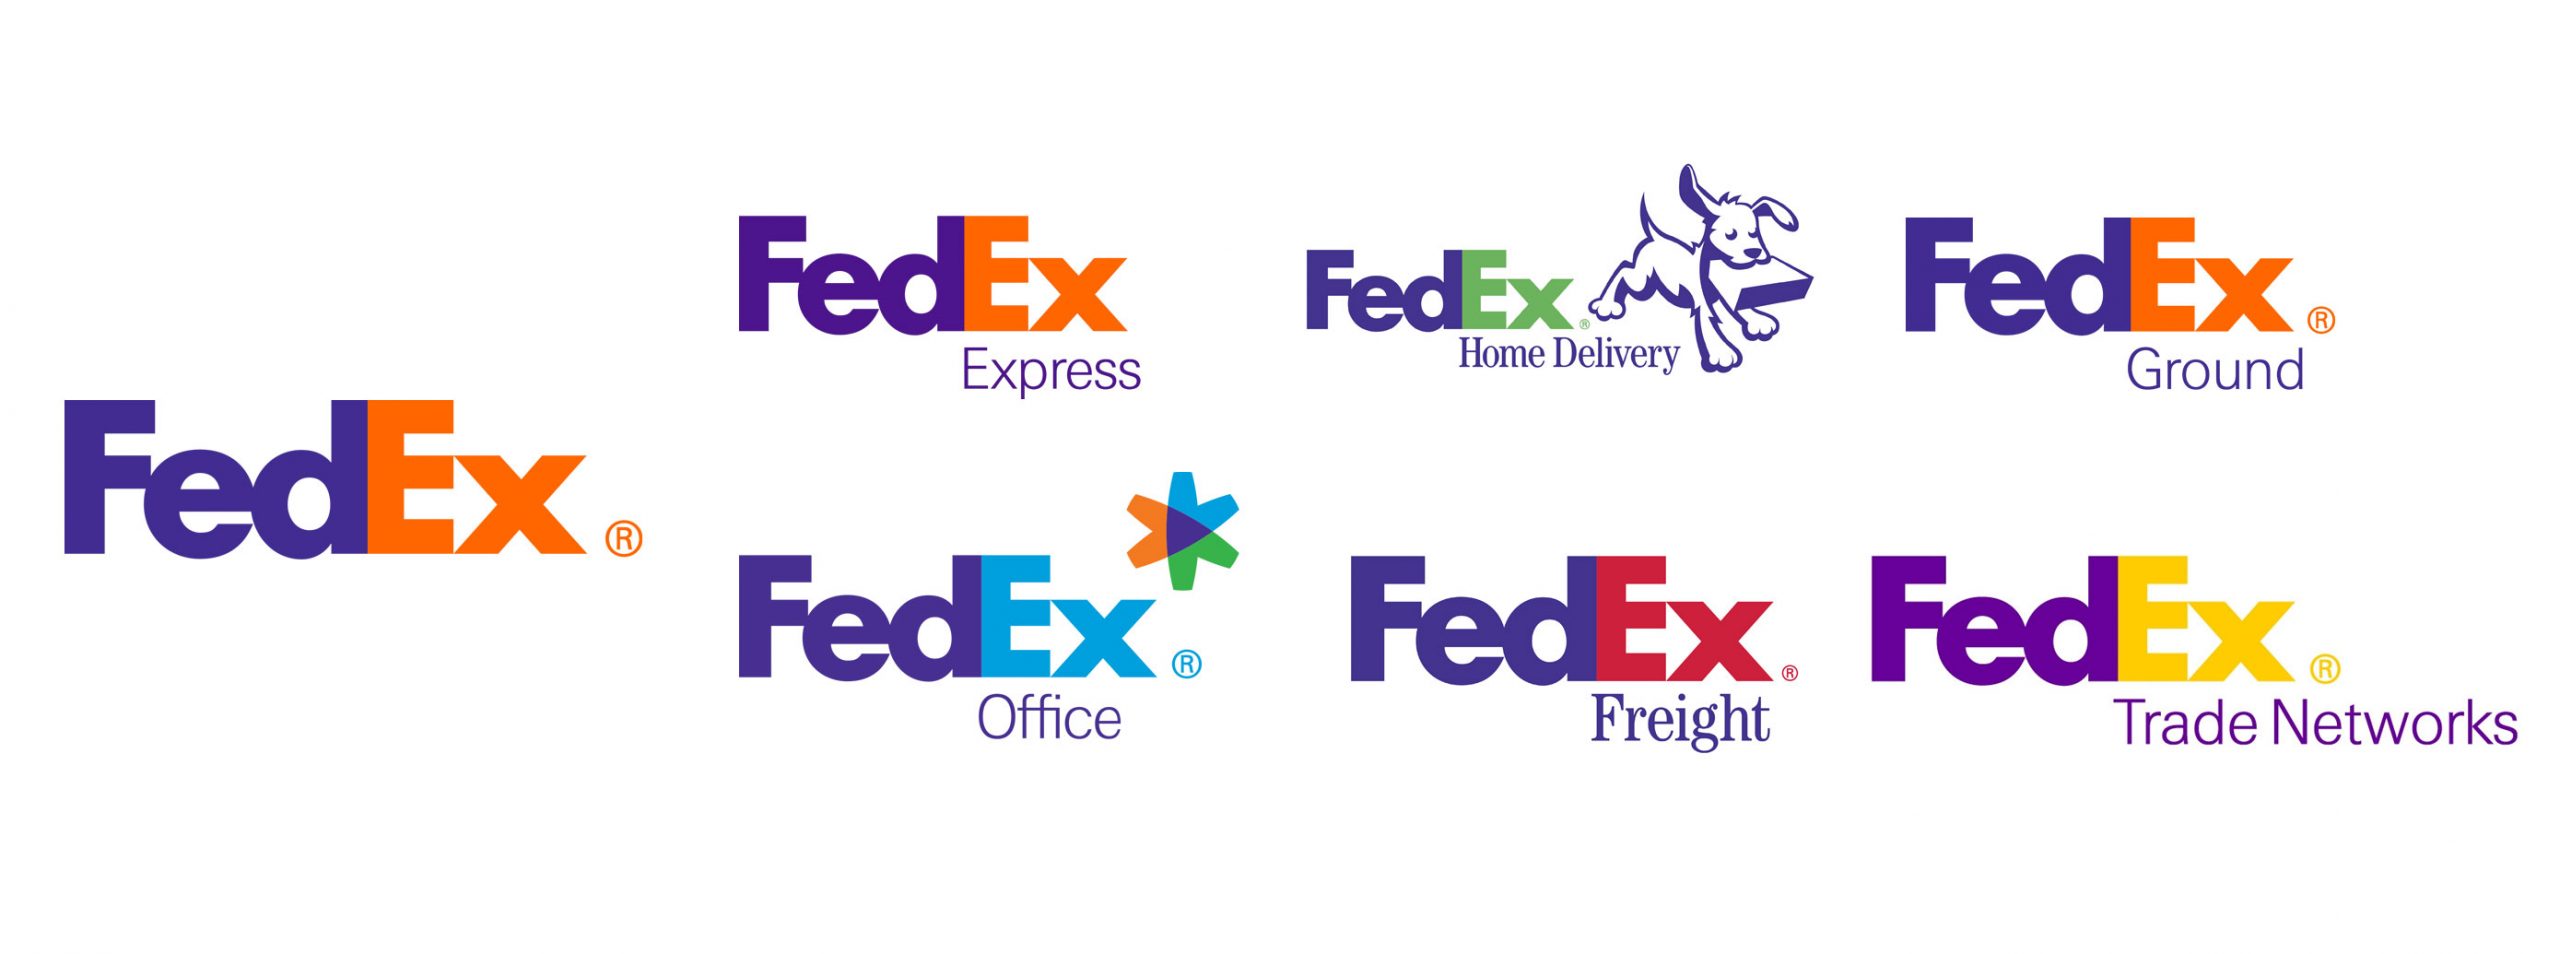 Fedex: The Branded House model